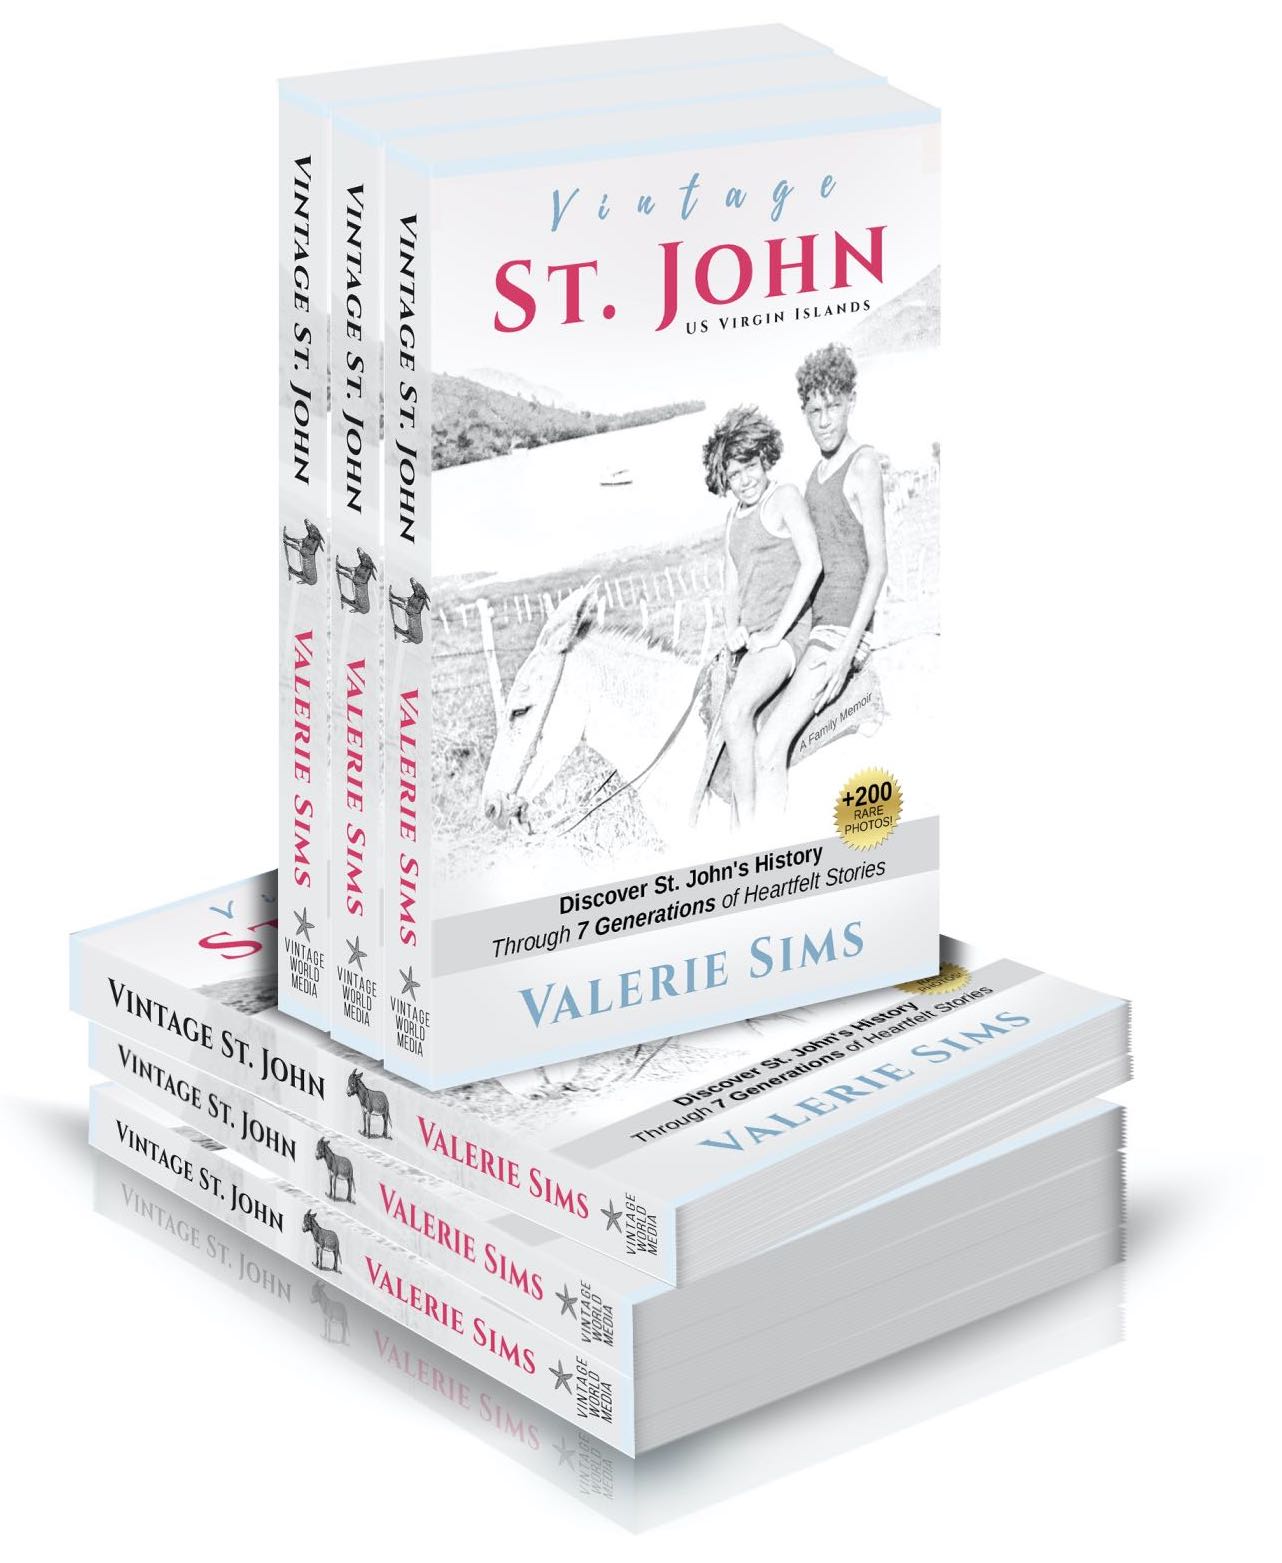 A stack of Vintage St. John books